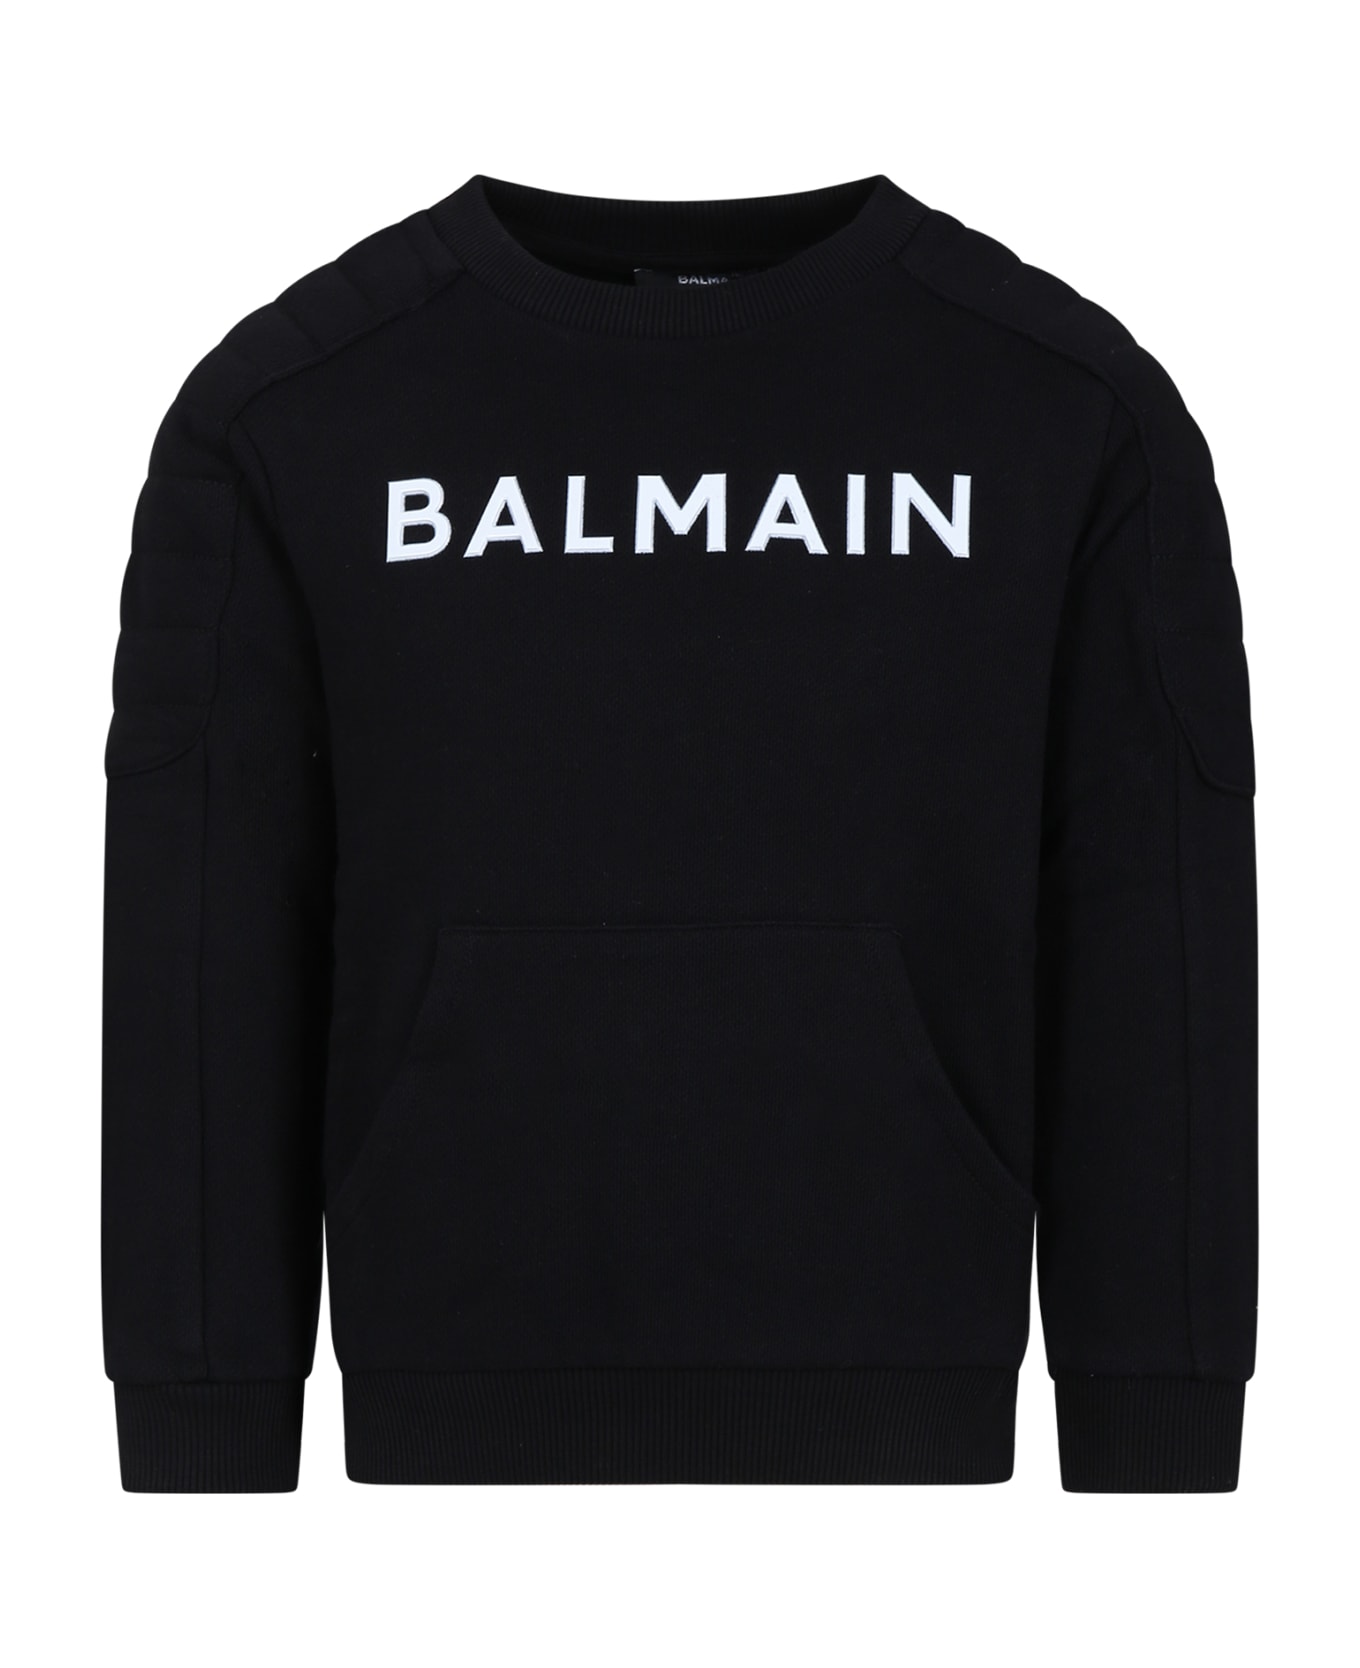 Balmain Sweat-shirt Noir Pour Fille Avec Logo - Black